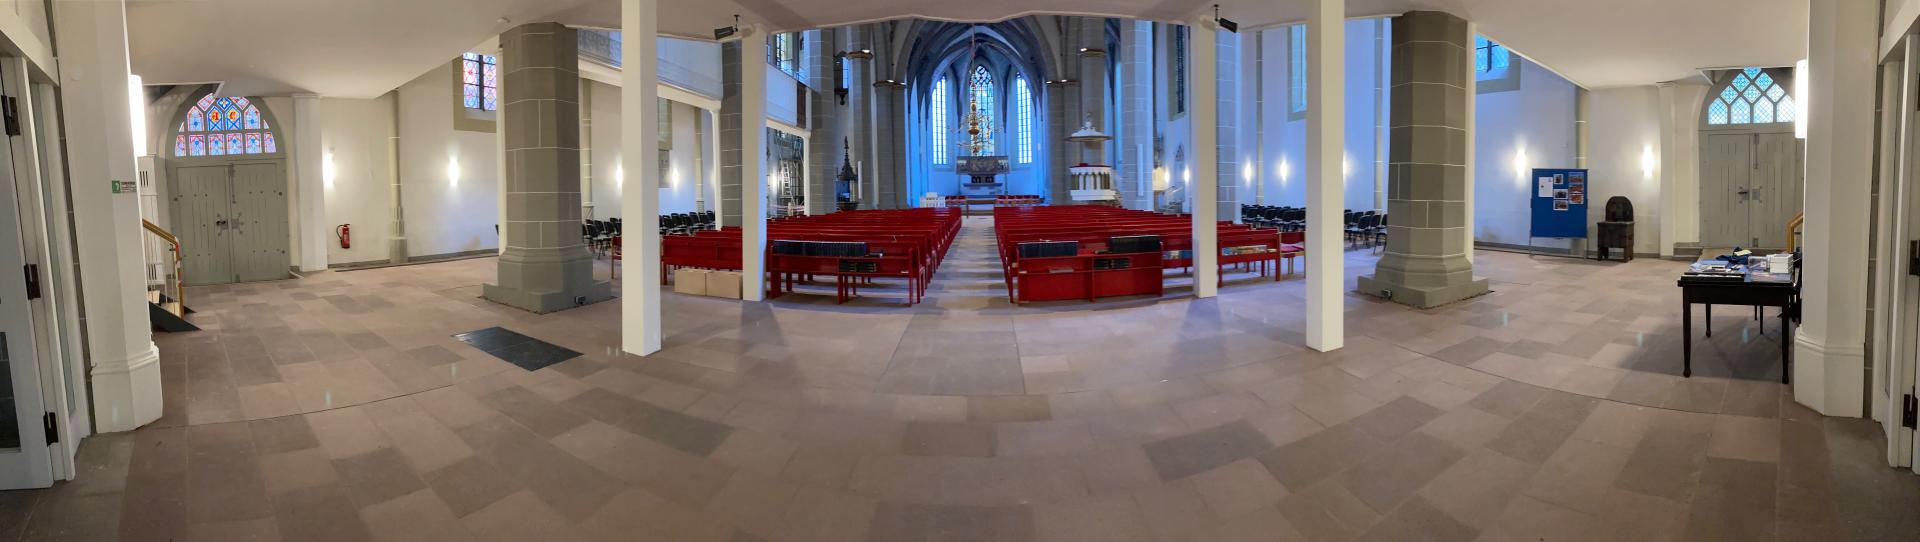 St. Sixti Im August 2021 - kurz vor dem Wiedereinzug Foto: C. Steigertahl